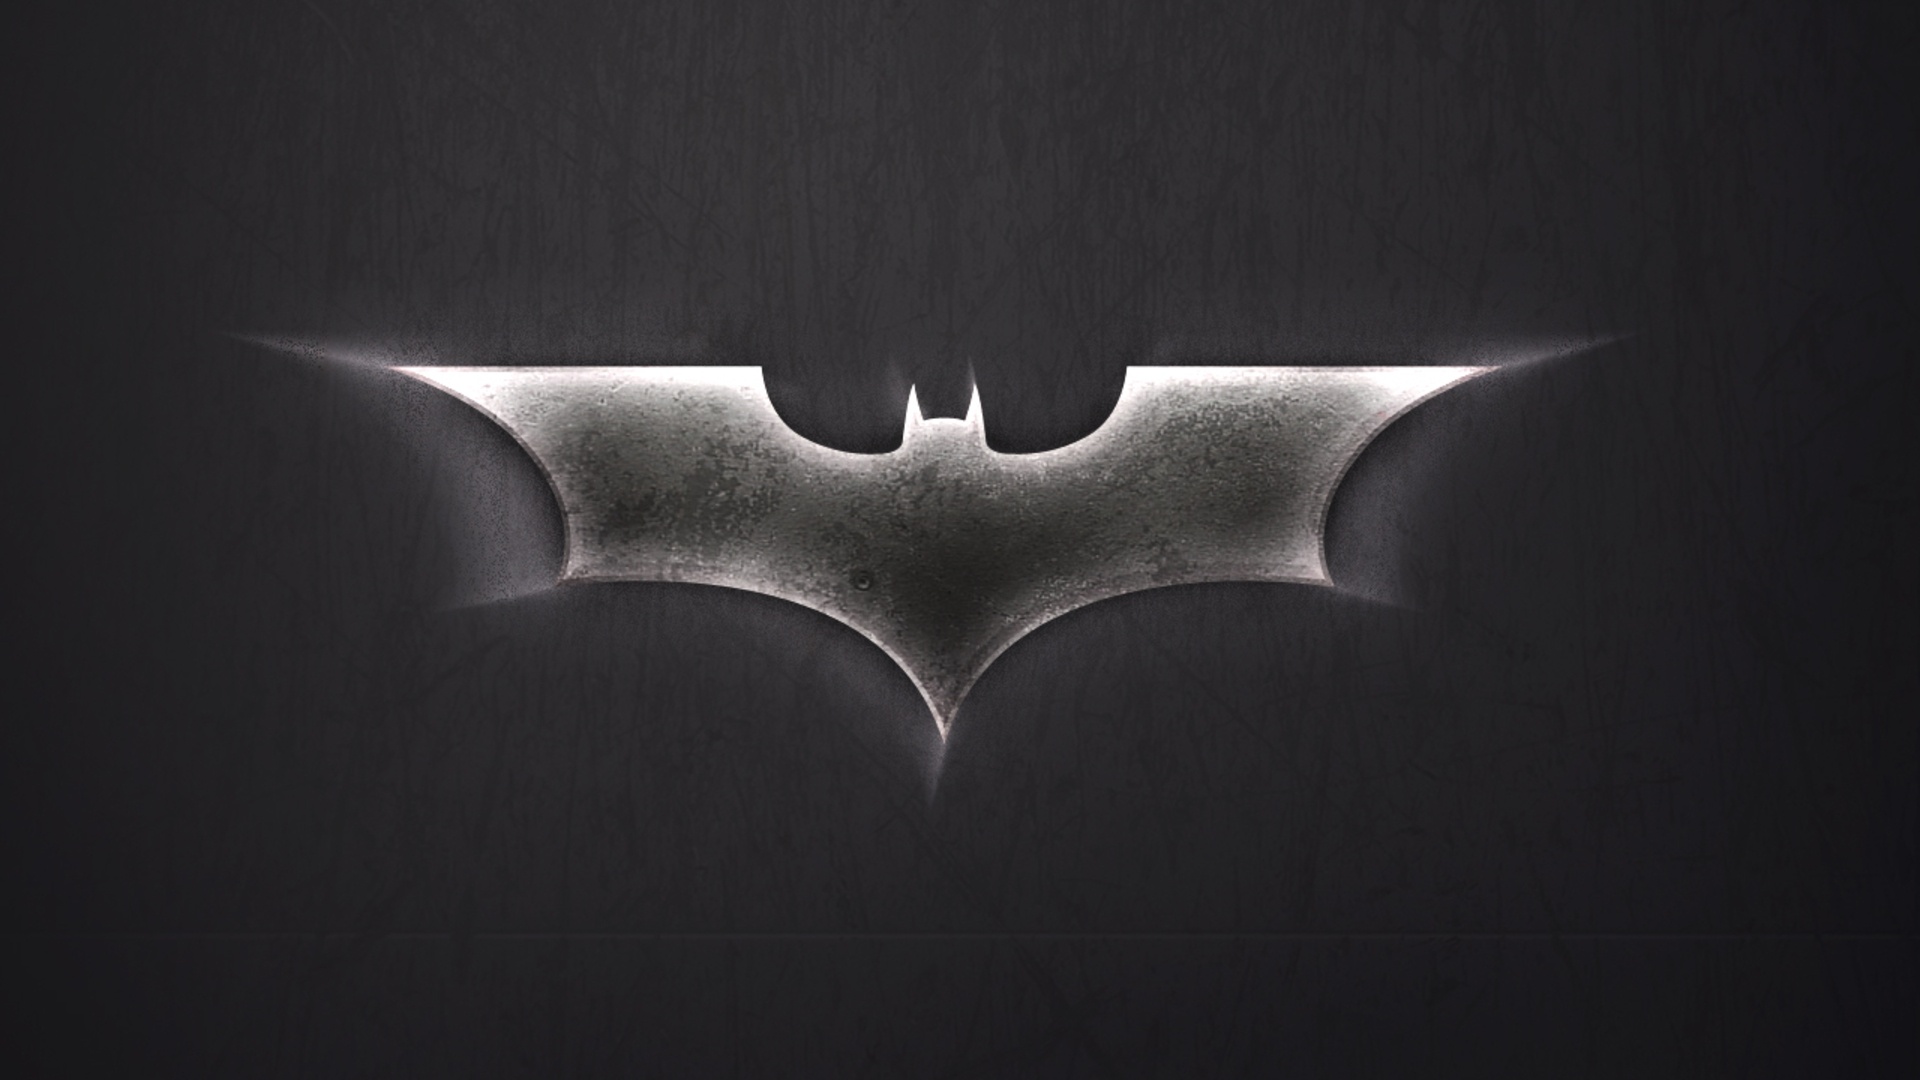 batman logo wallpaper 1920x1080